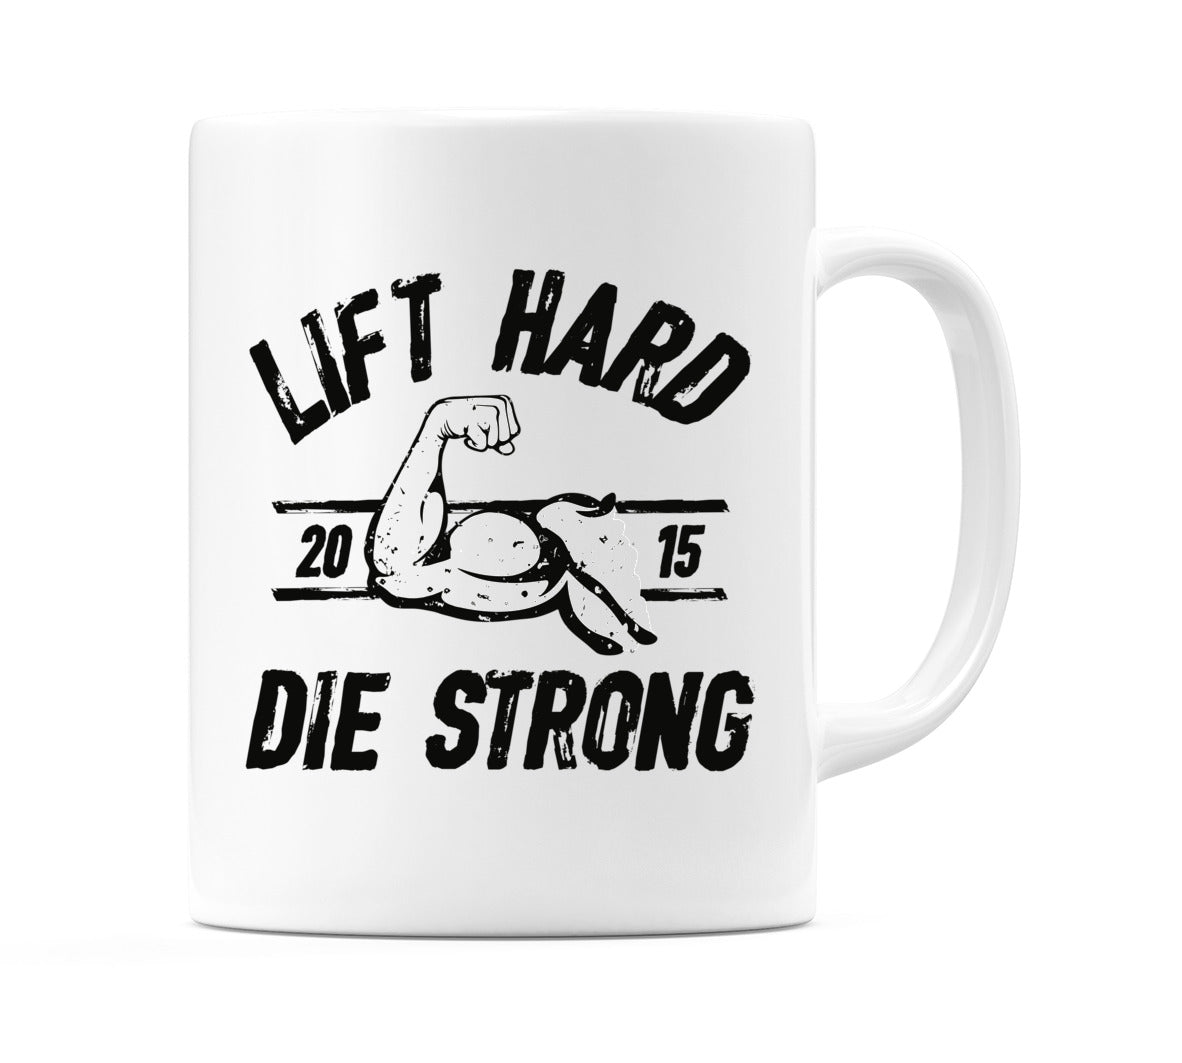 Lift Hard Die Strong Mug